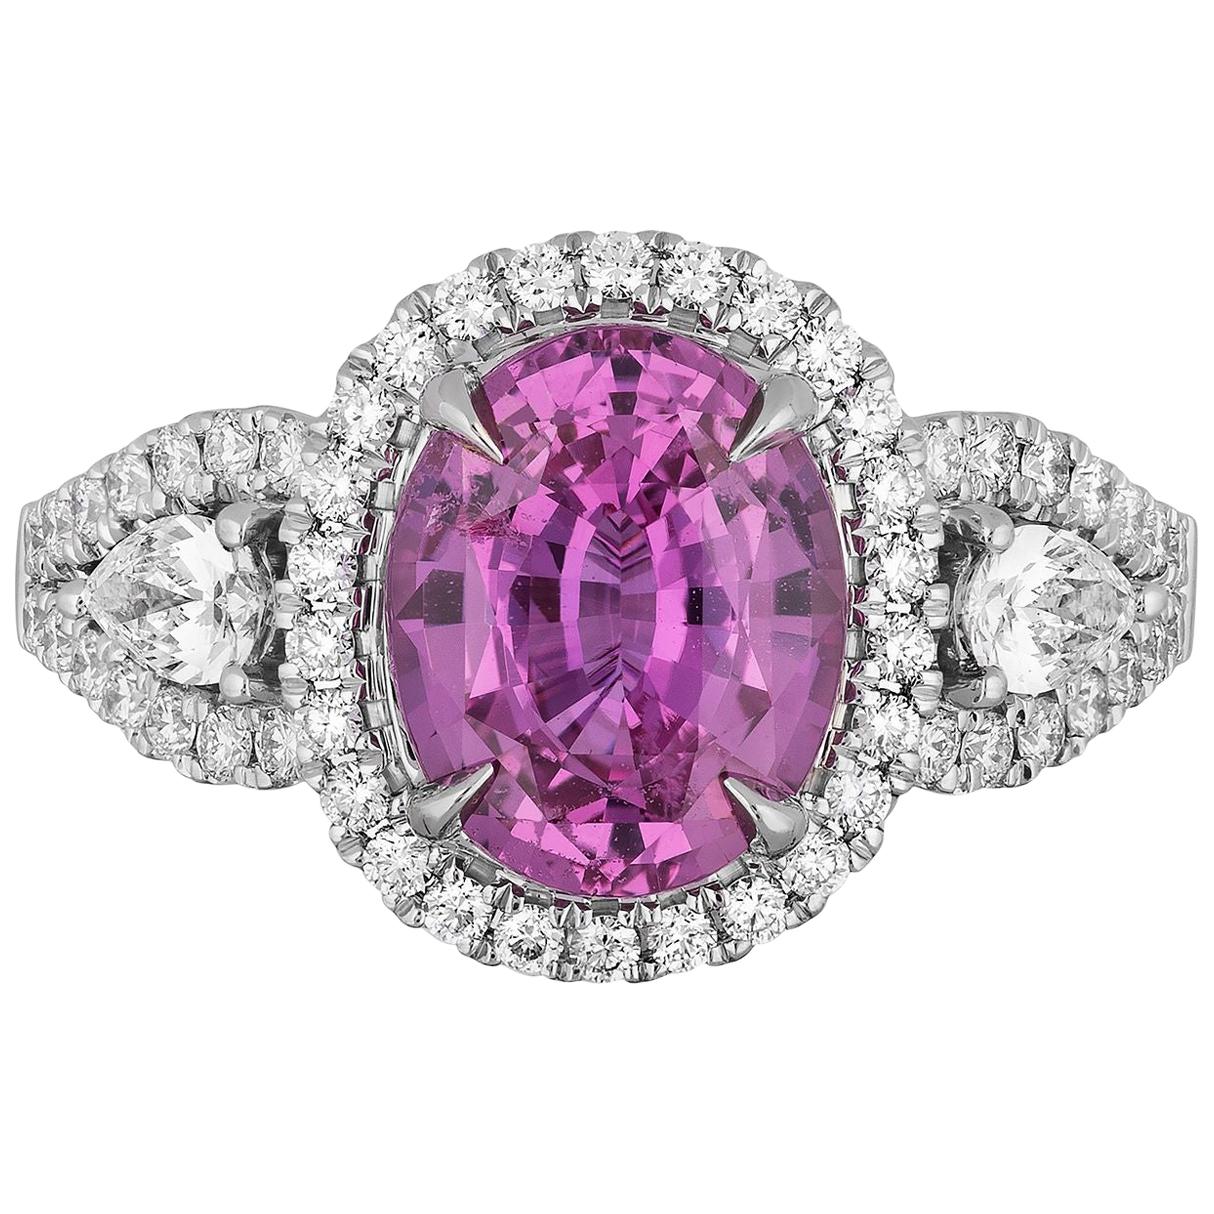 3.07 Carat Pink Sapphire Diamond Cocktail Ring